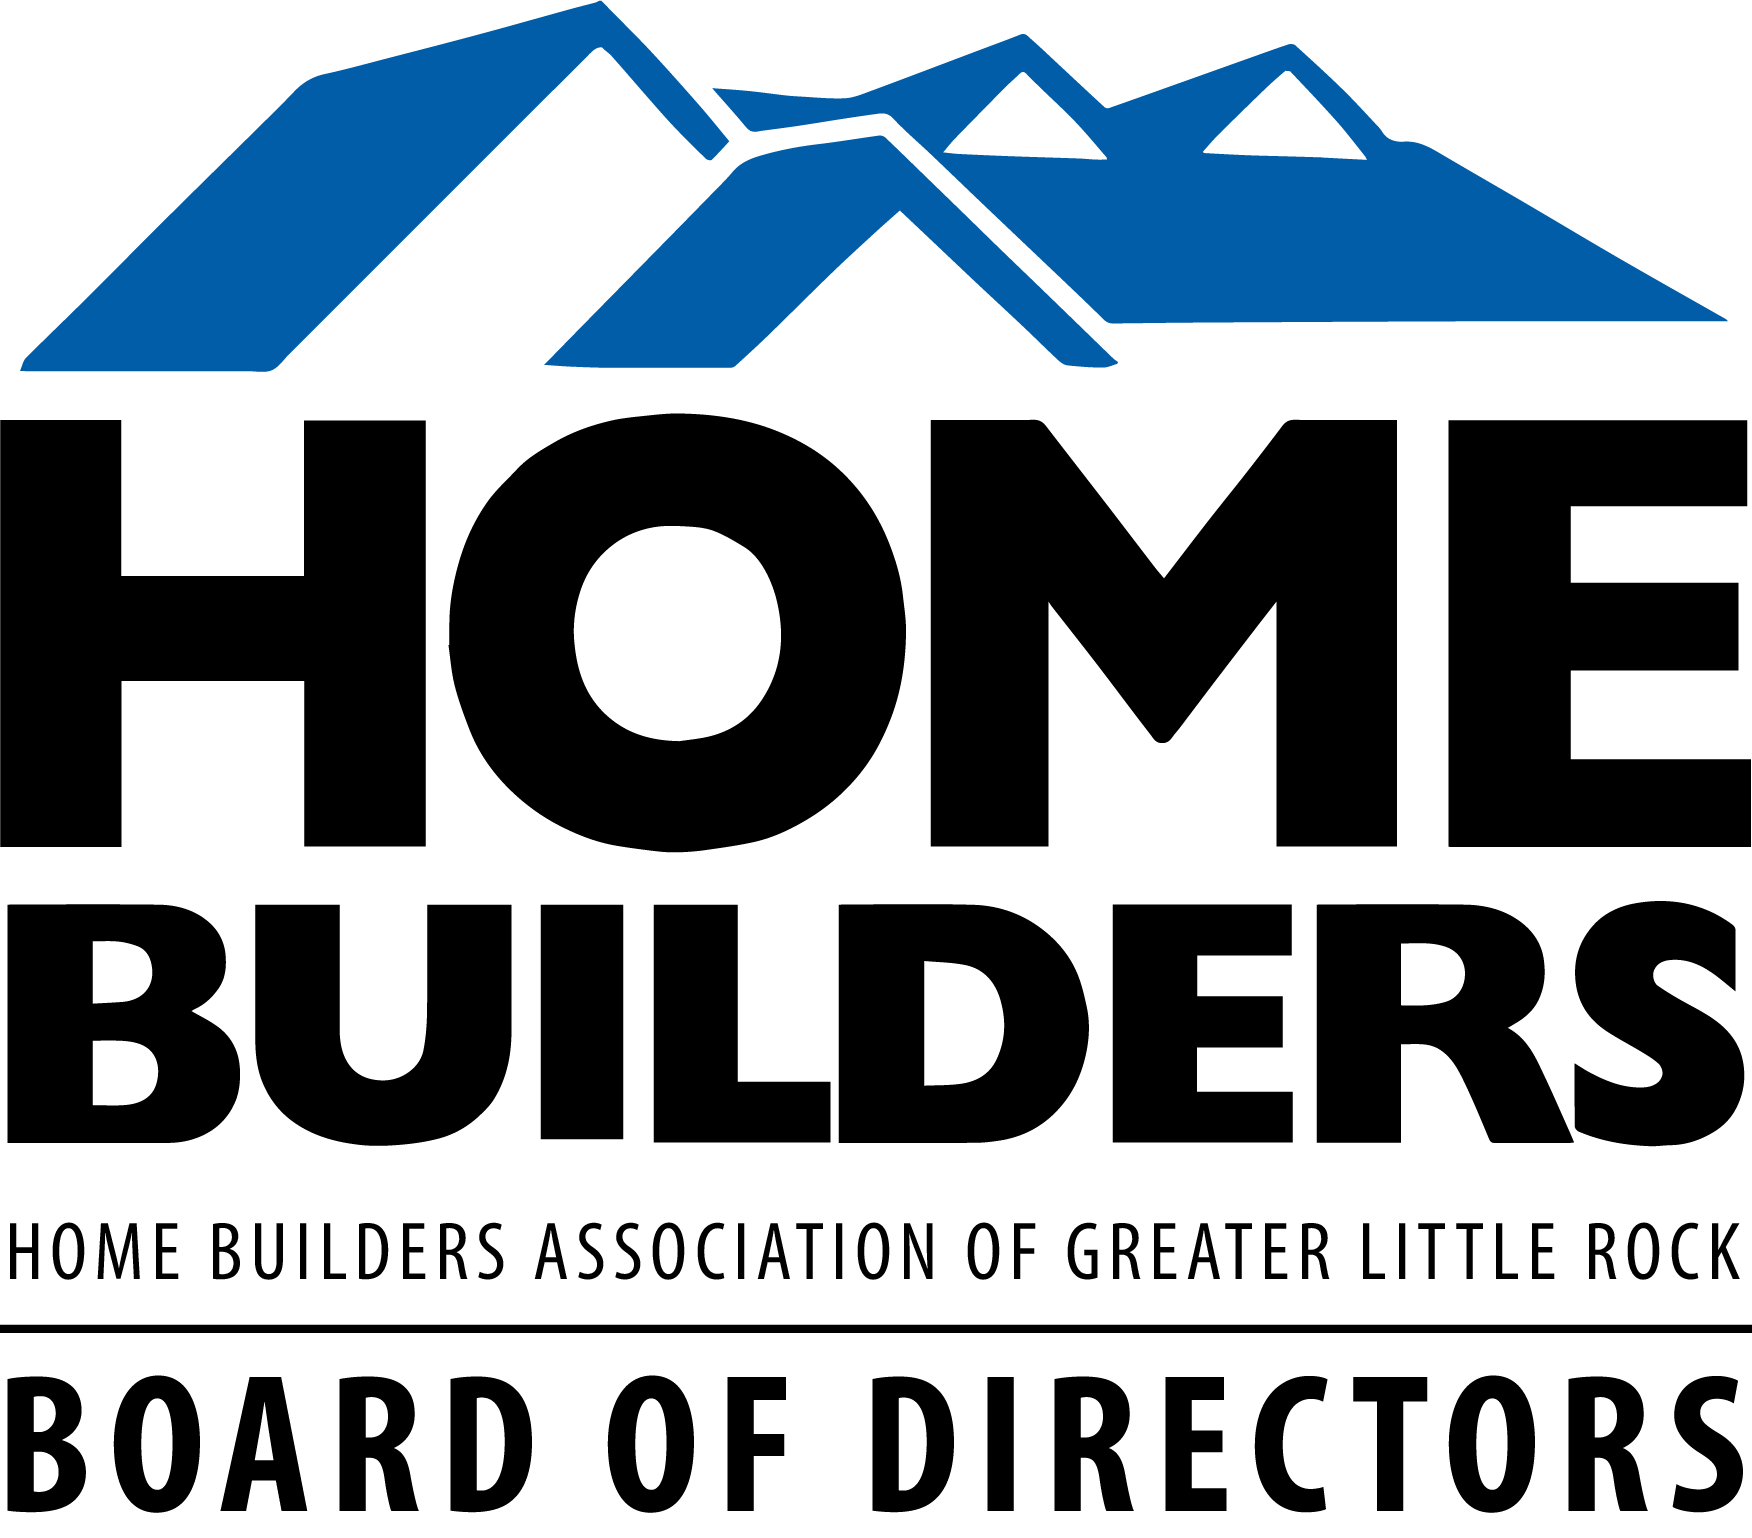 home builders associate of greater little rock